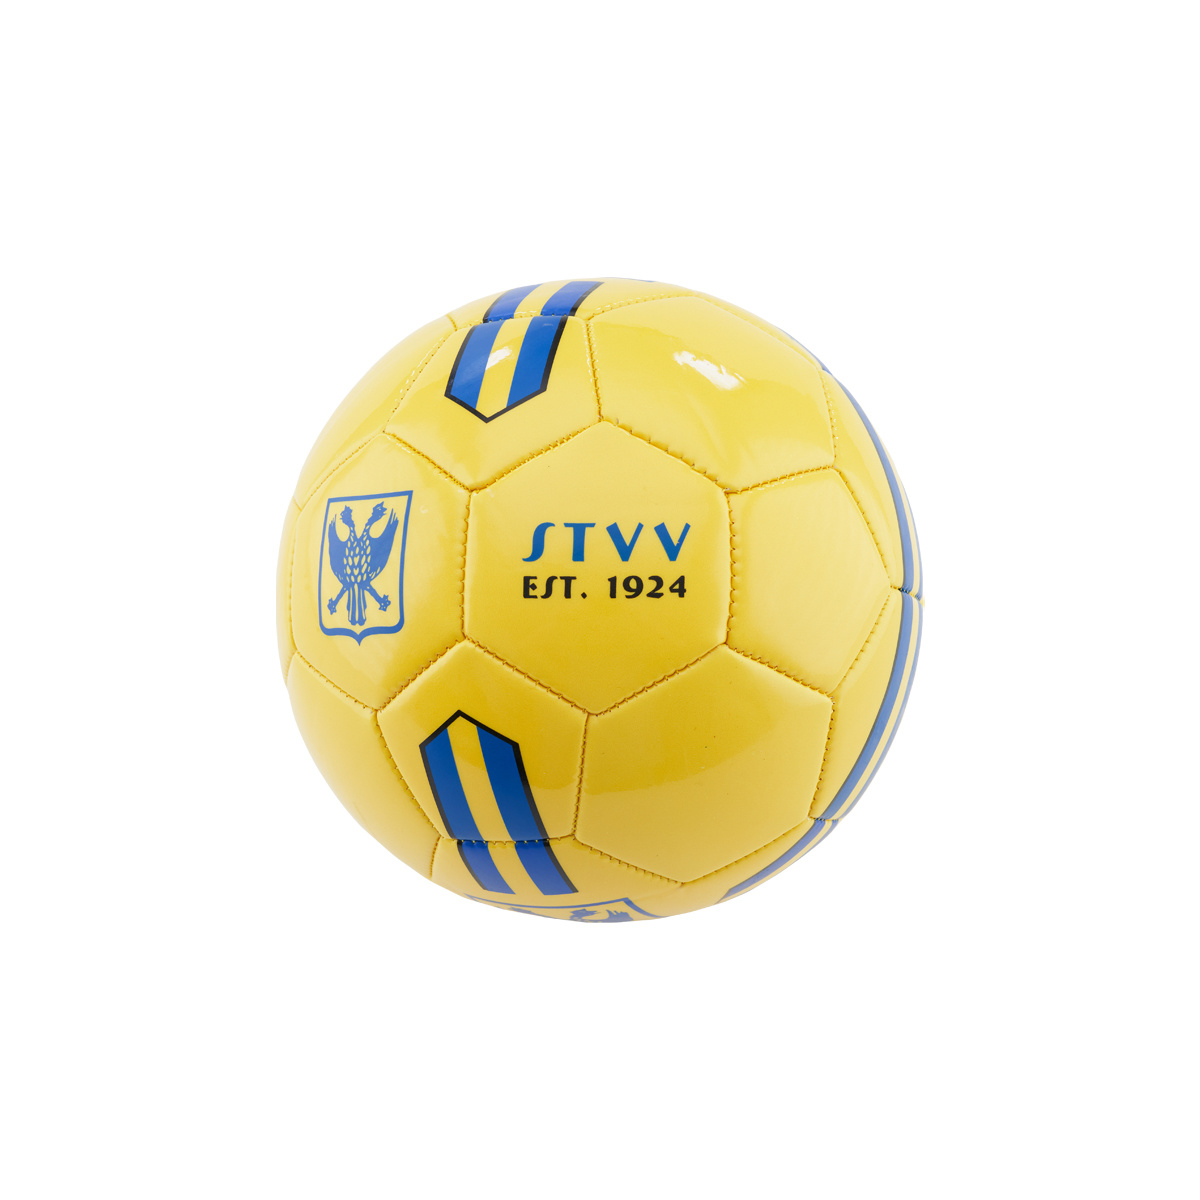 Topfanz Ballon de foot 5 STVV logo jaune